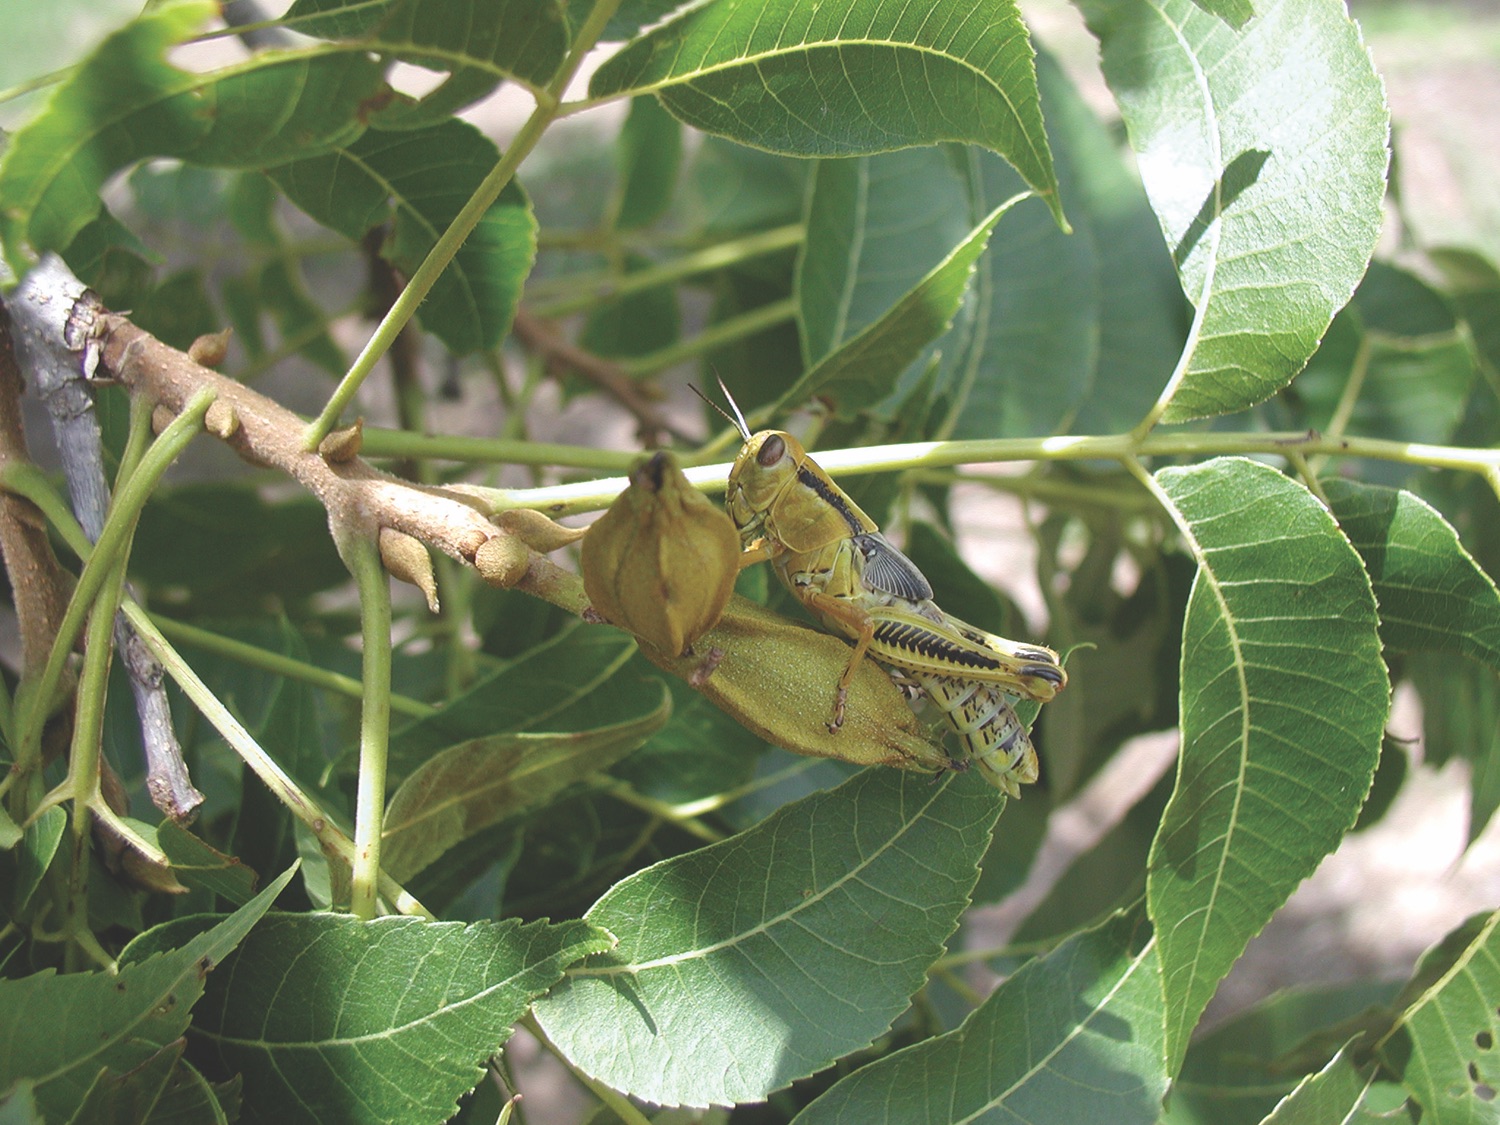 Adult grasshopper on pecan.